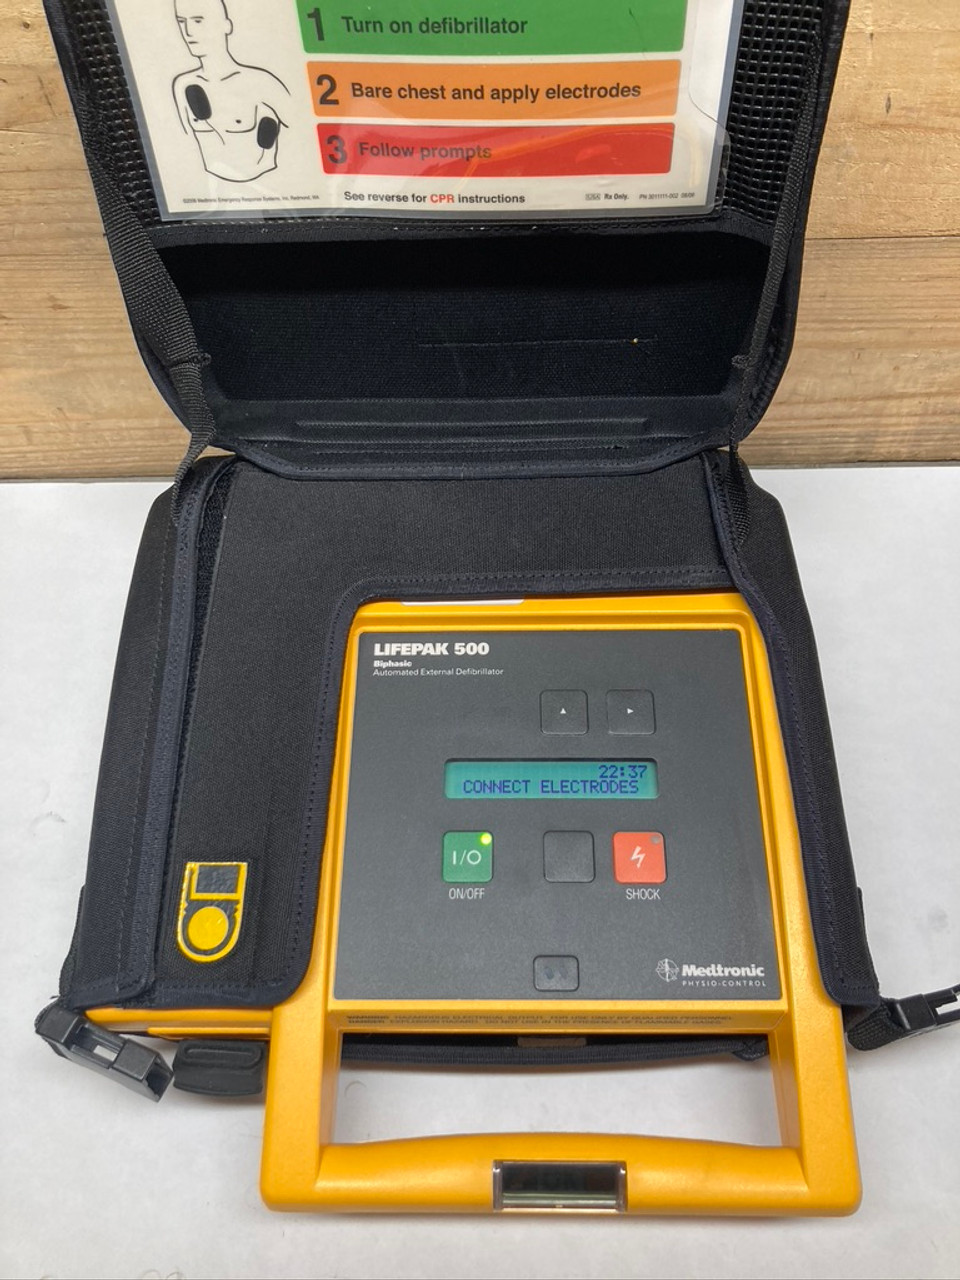 Lifepak 500 Automated External Defibrillator 3011790-001129 Physio-Control